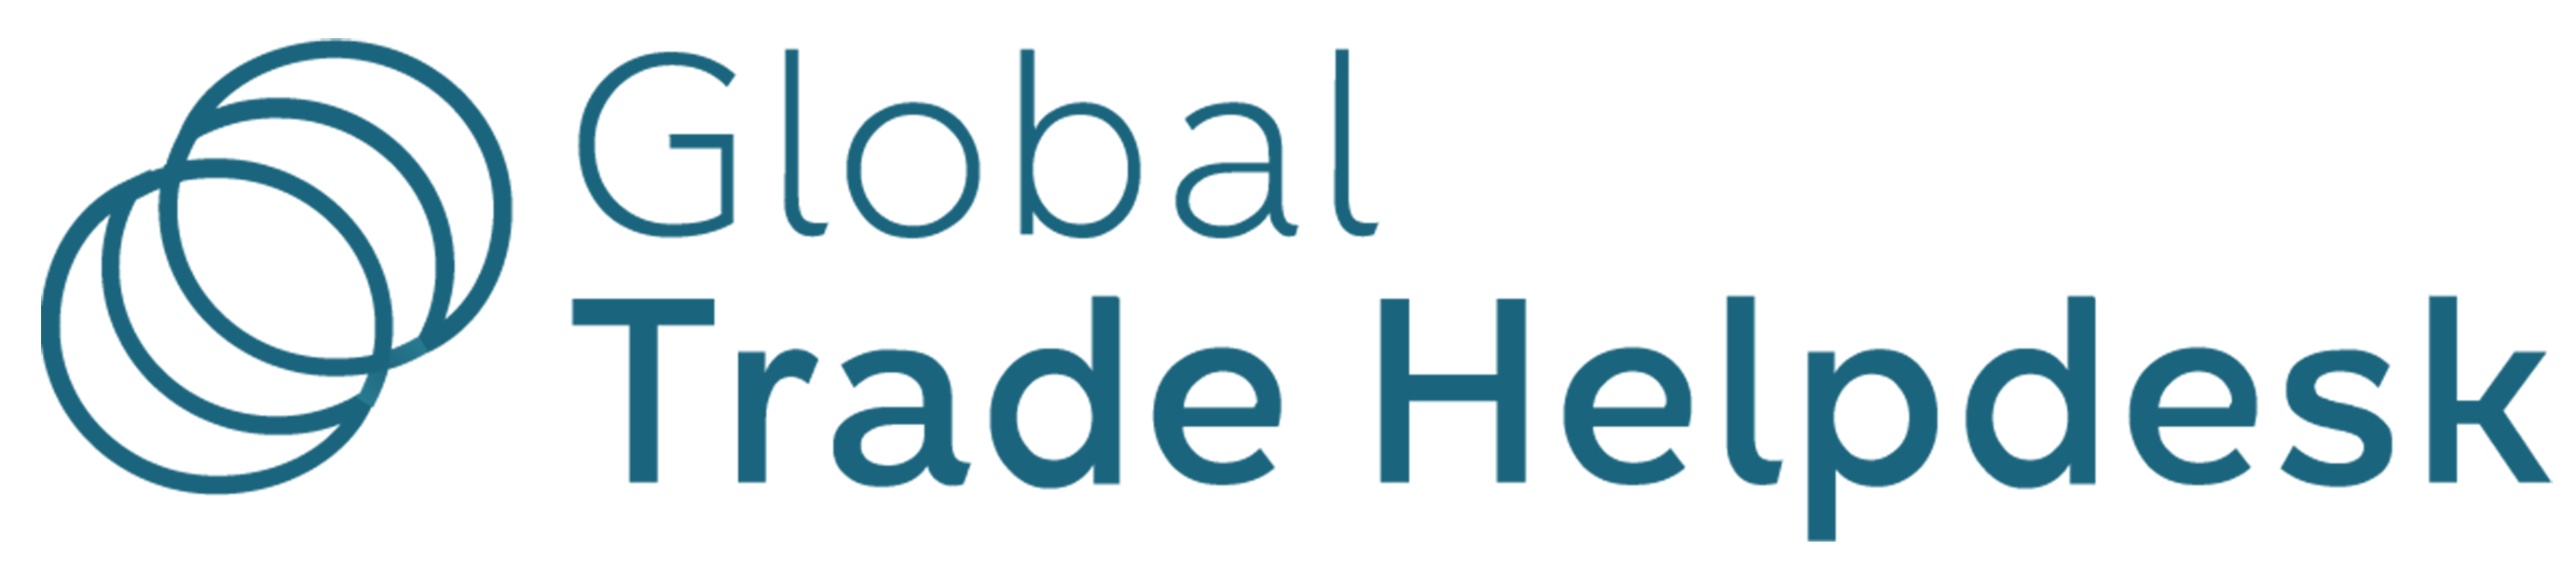 Global Trade Helpdesk logo